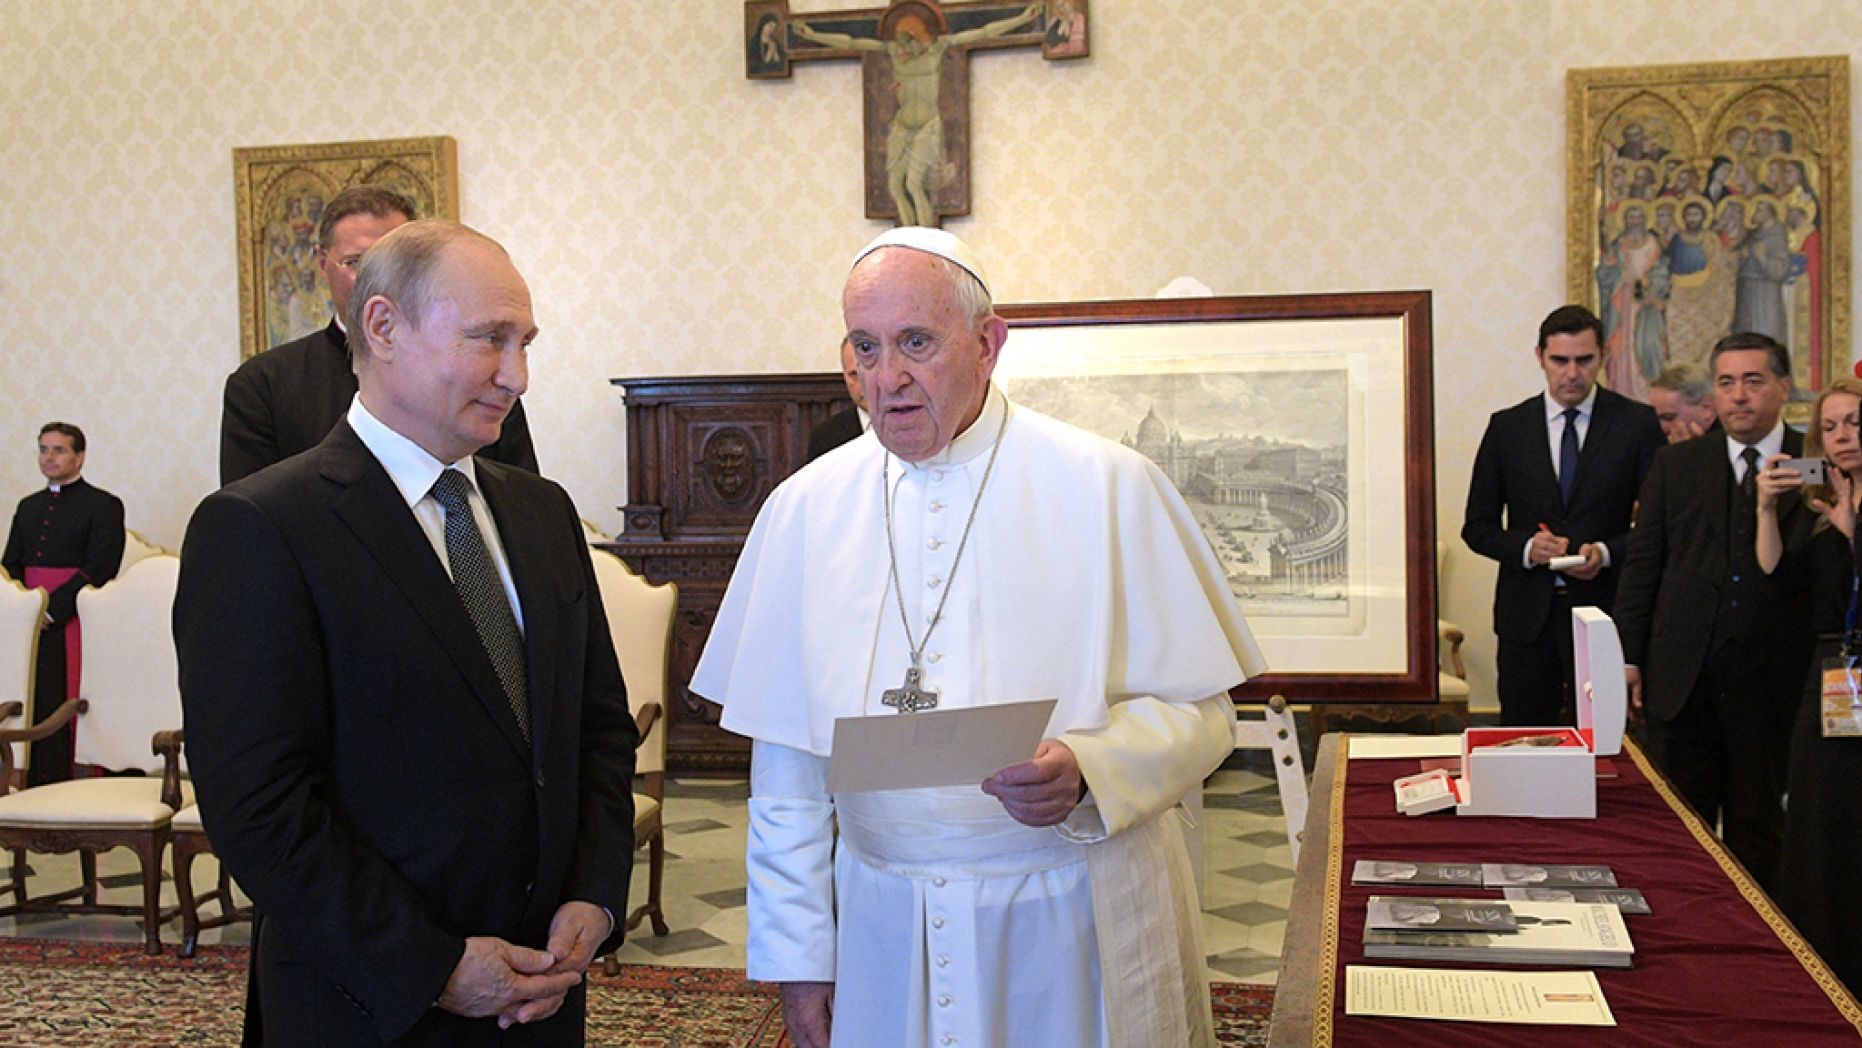 Pope Francis and Putin meet at Vatican, discuss Syria, Ukraine